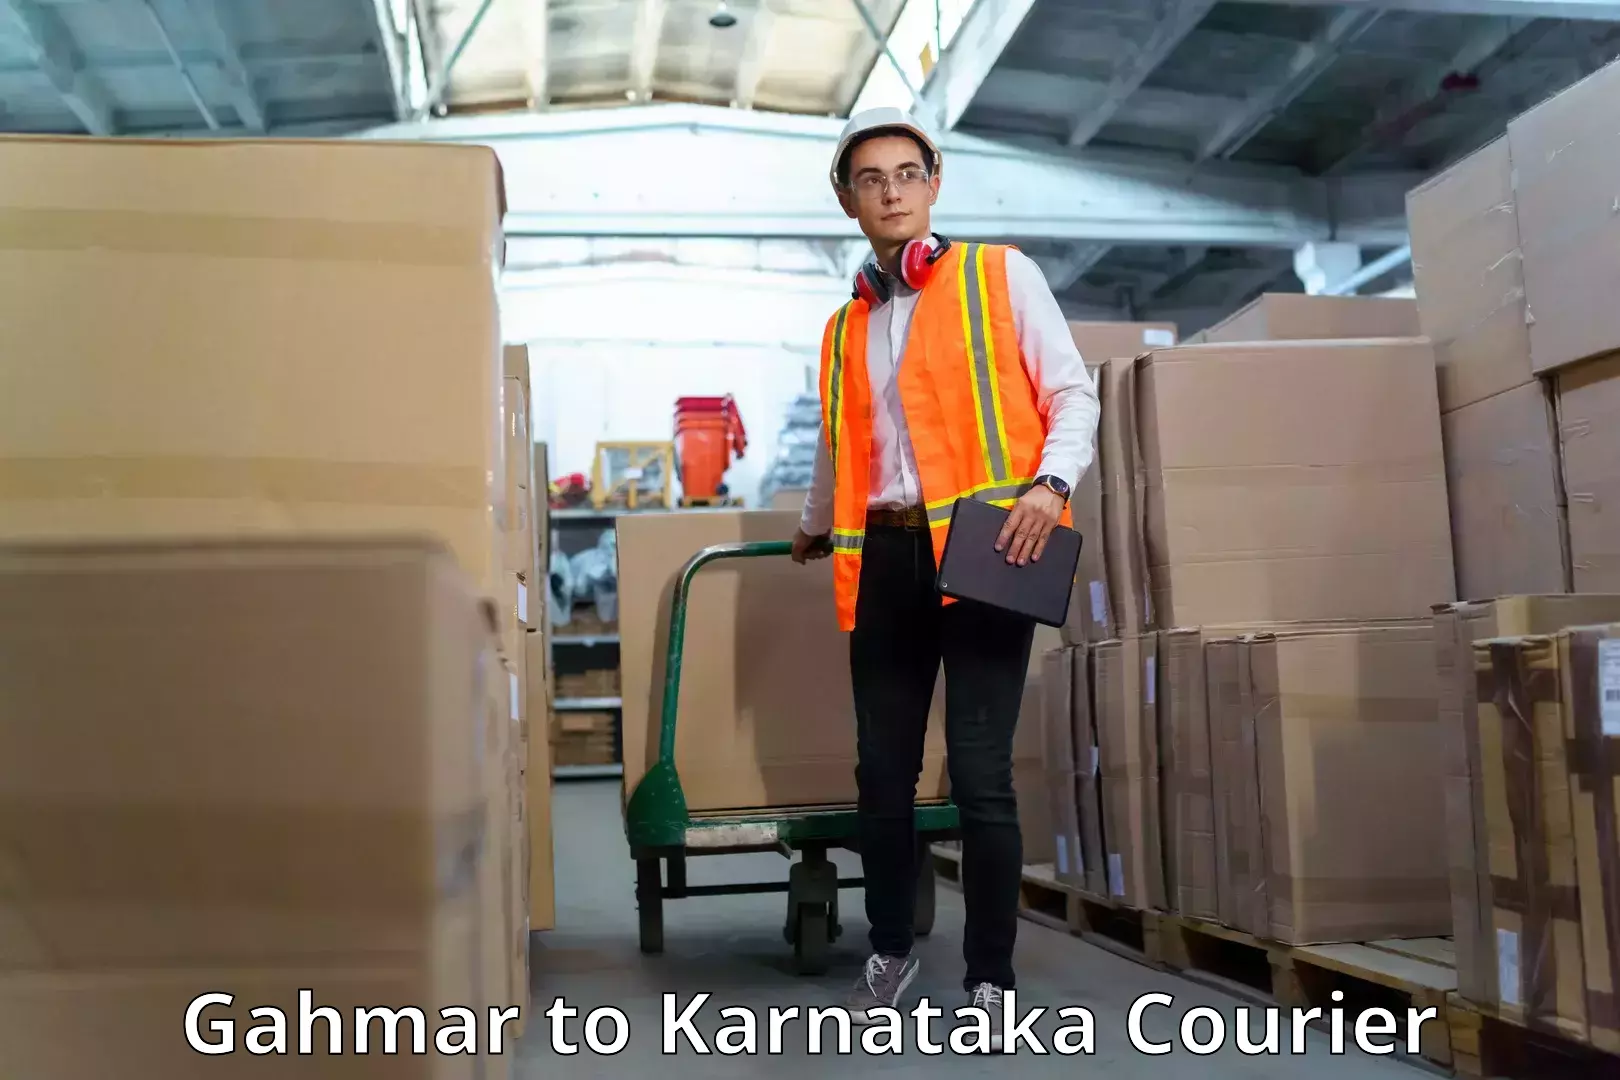 On-call courier service Gahmar to Karnataka